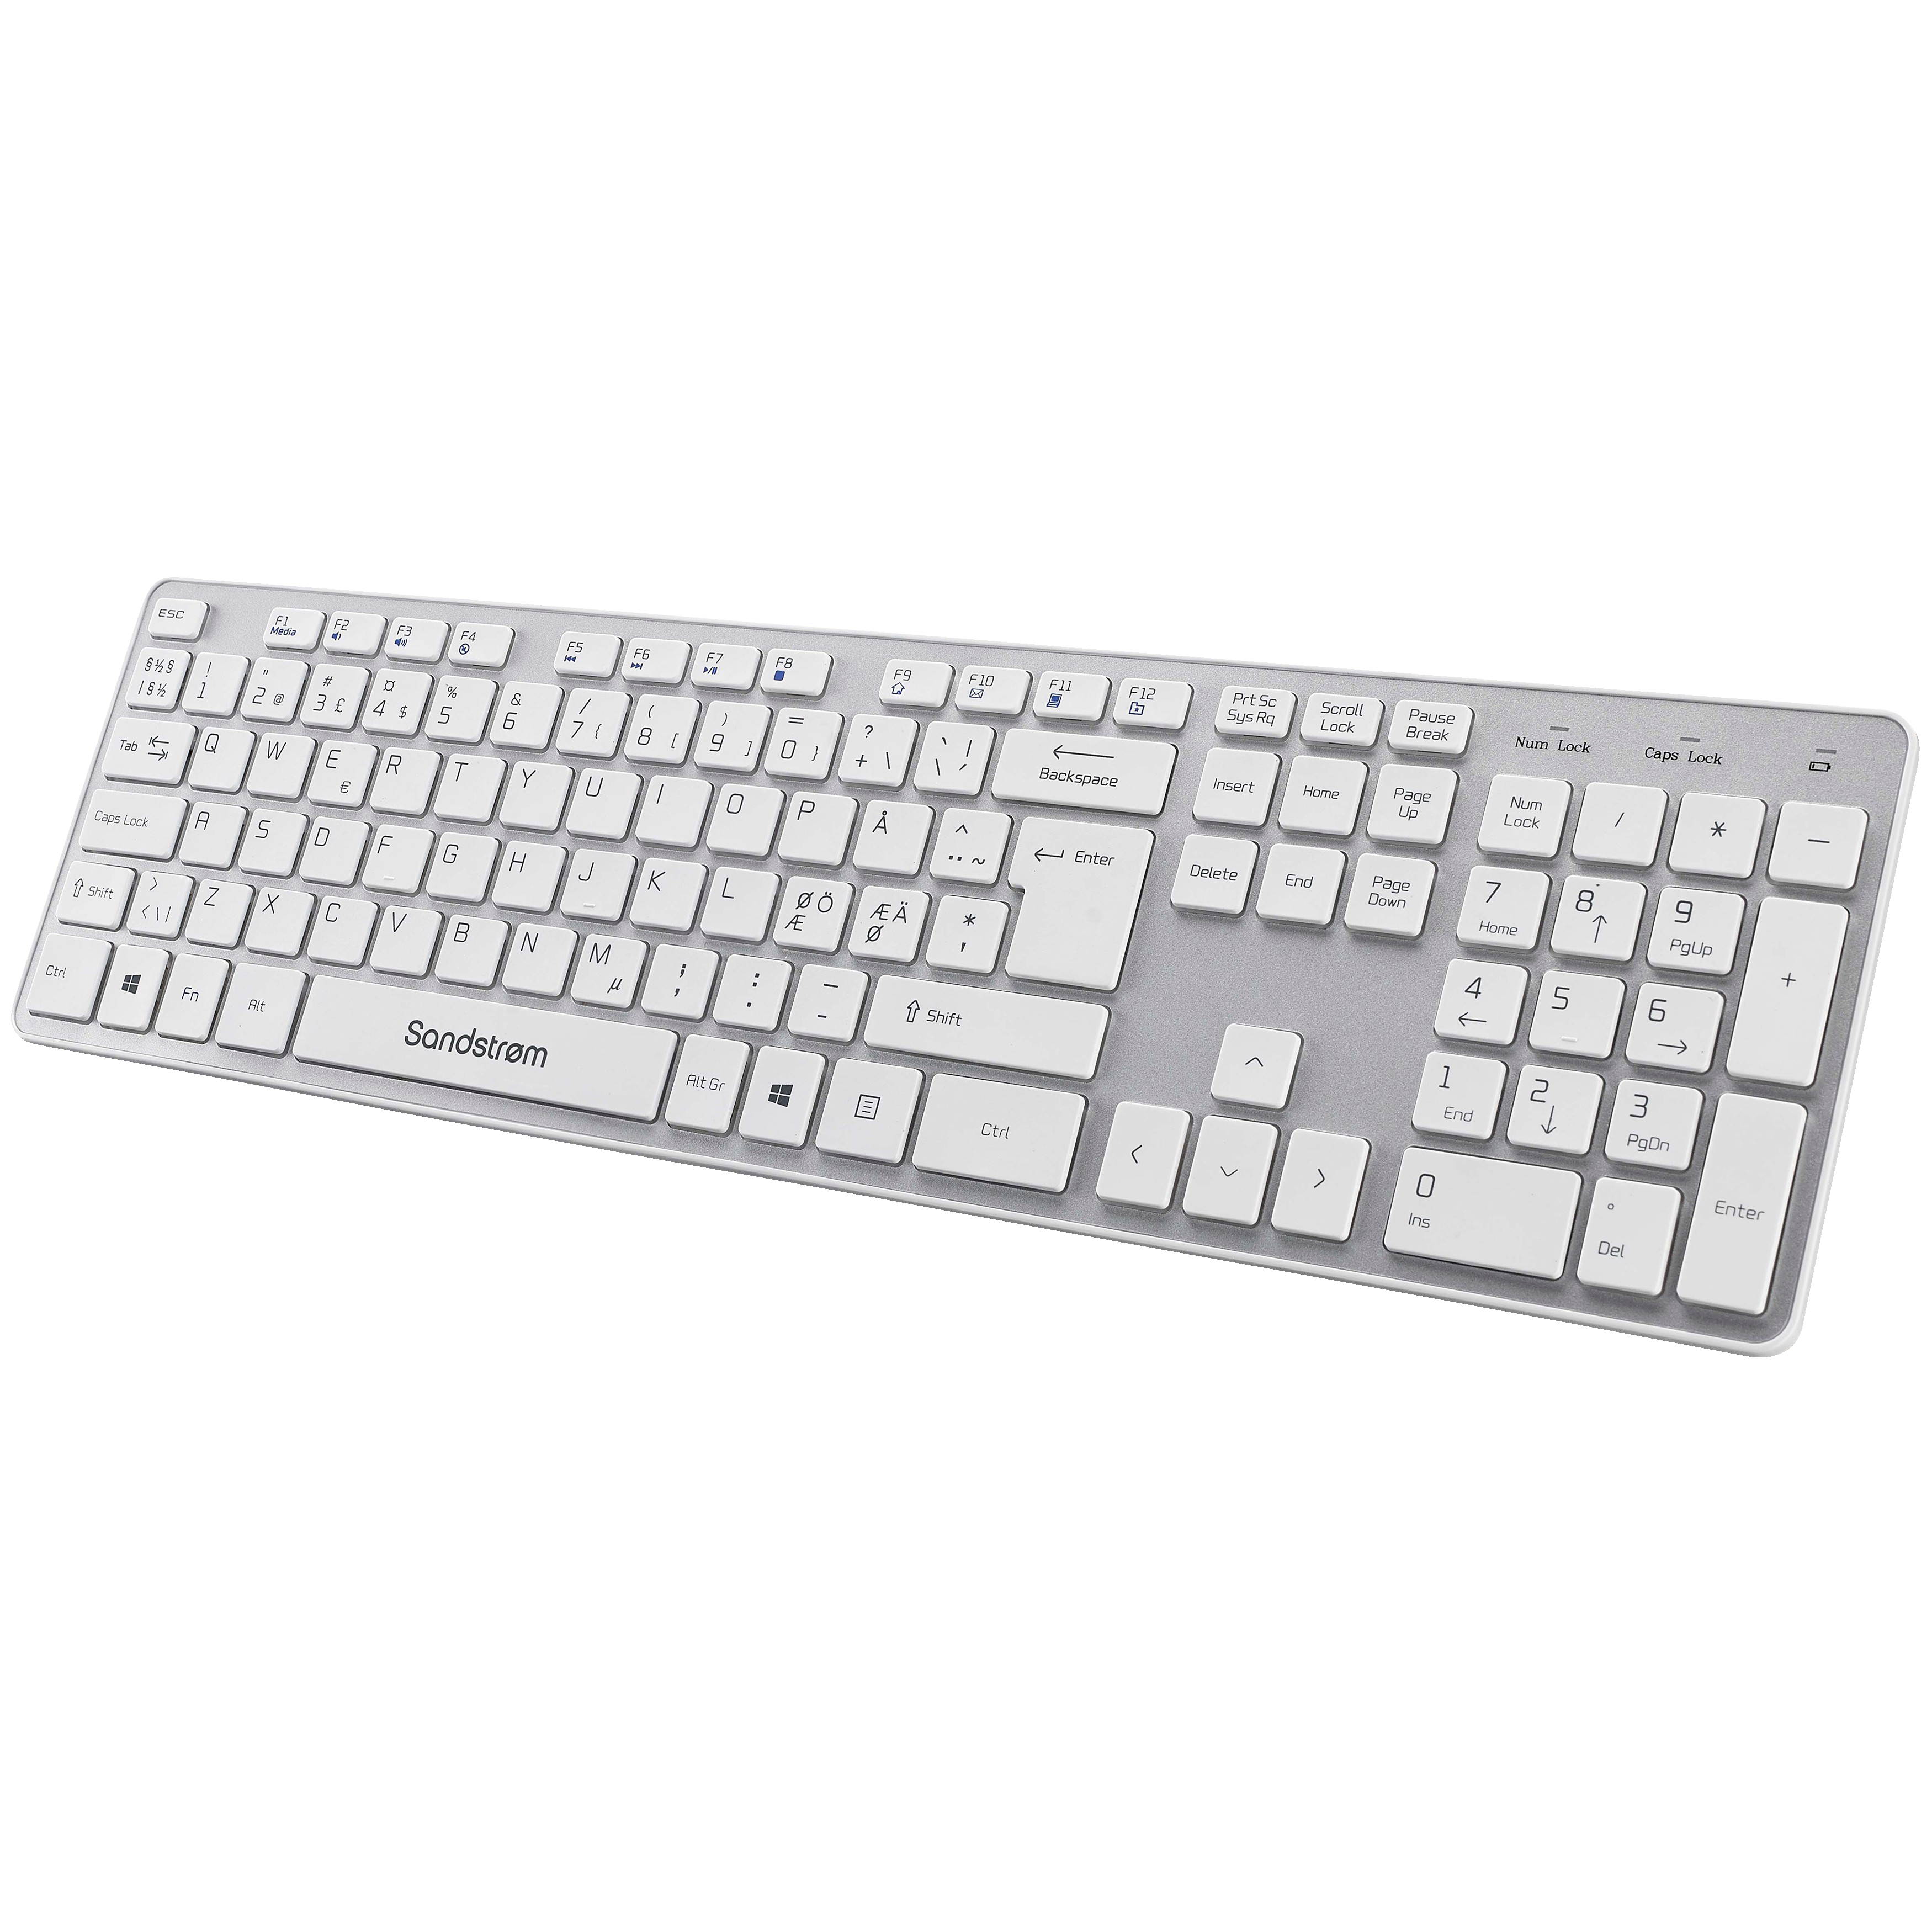 Sandstrøm trådløst tastatur (hvit/grå) - Tastatur - Elkjøp